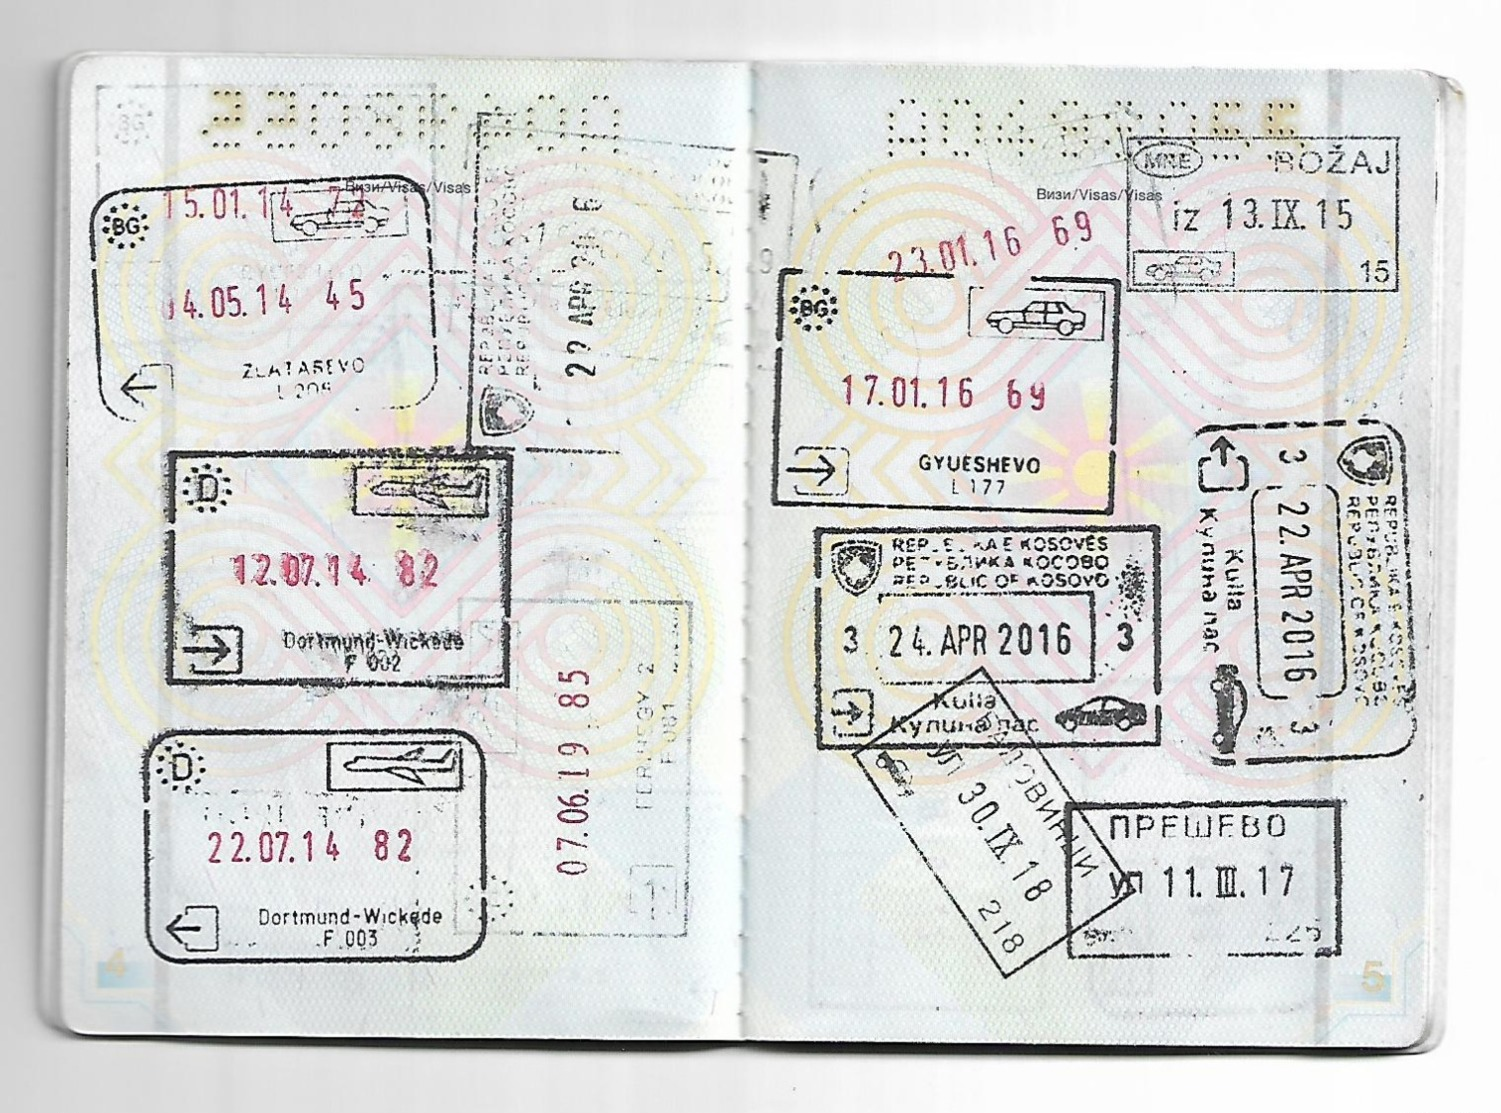 Passeport,passport, pasaporte, reisepass,Republic of Macedonia,canceled.girl visa all europa